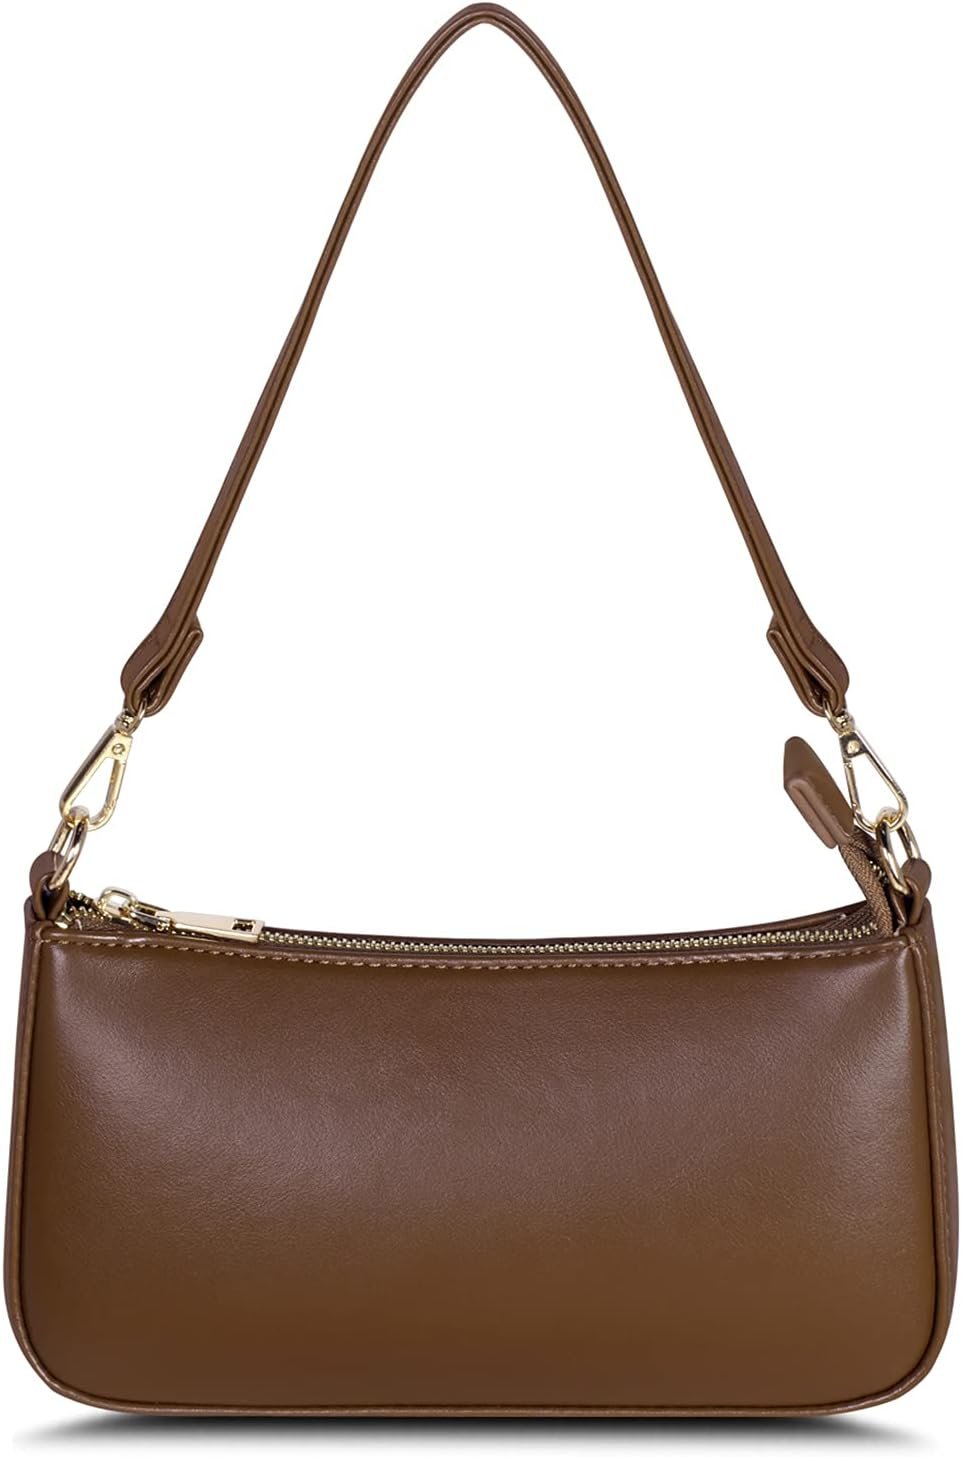 NIUEIMEE ZHOU Shoulder Bag for Women Retro Vegan Leather Classic Clutch Tote HandBags Purses with Zipper Closure